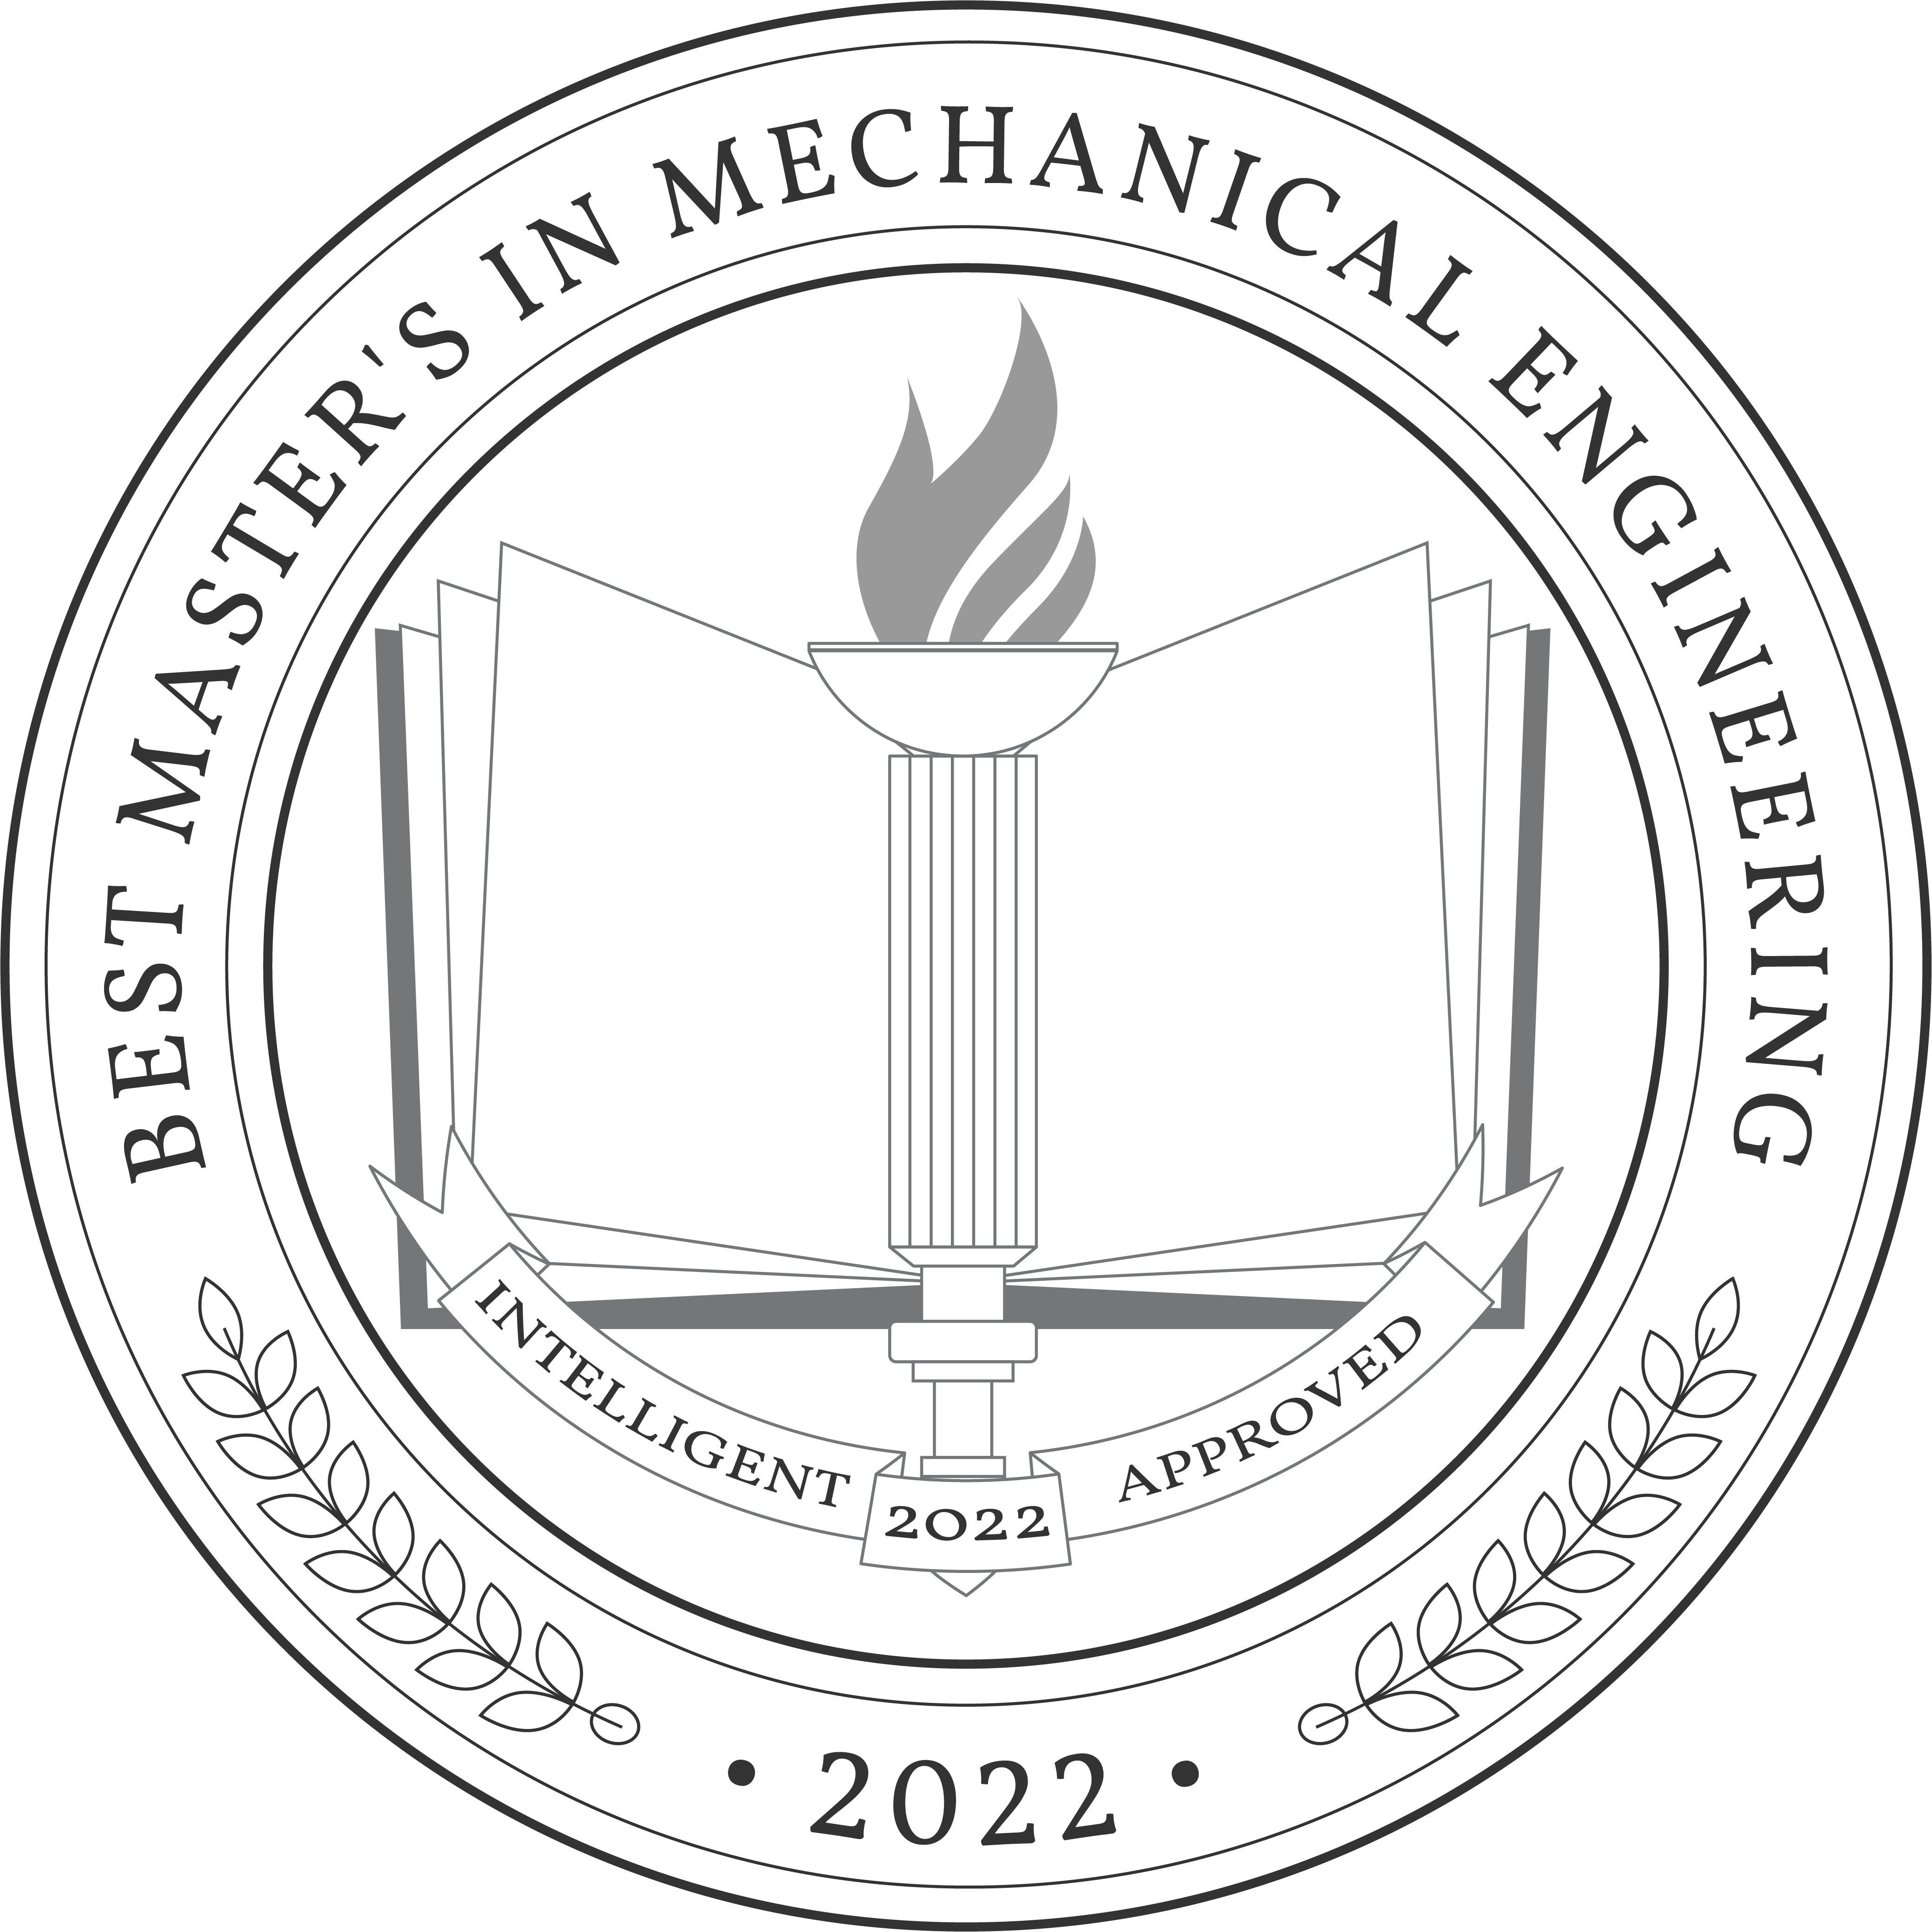 Best Master's in Mechanical Engineering Degree Programs